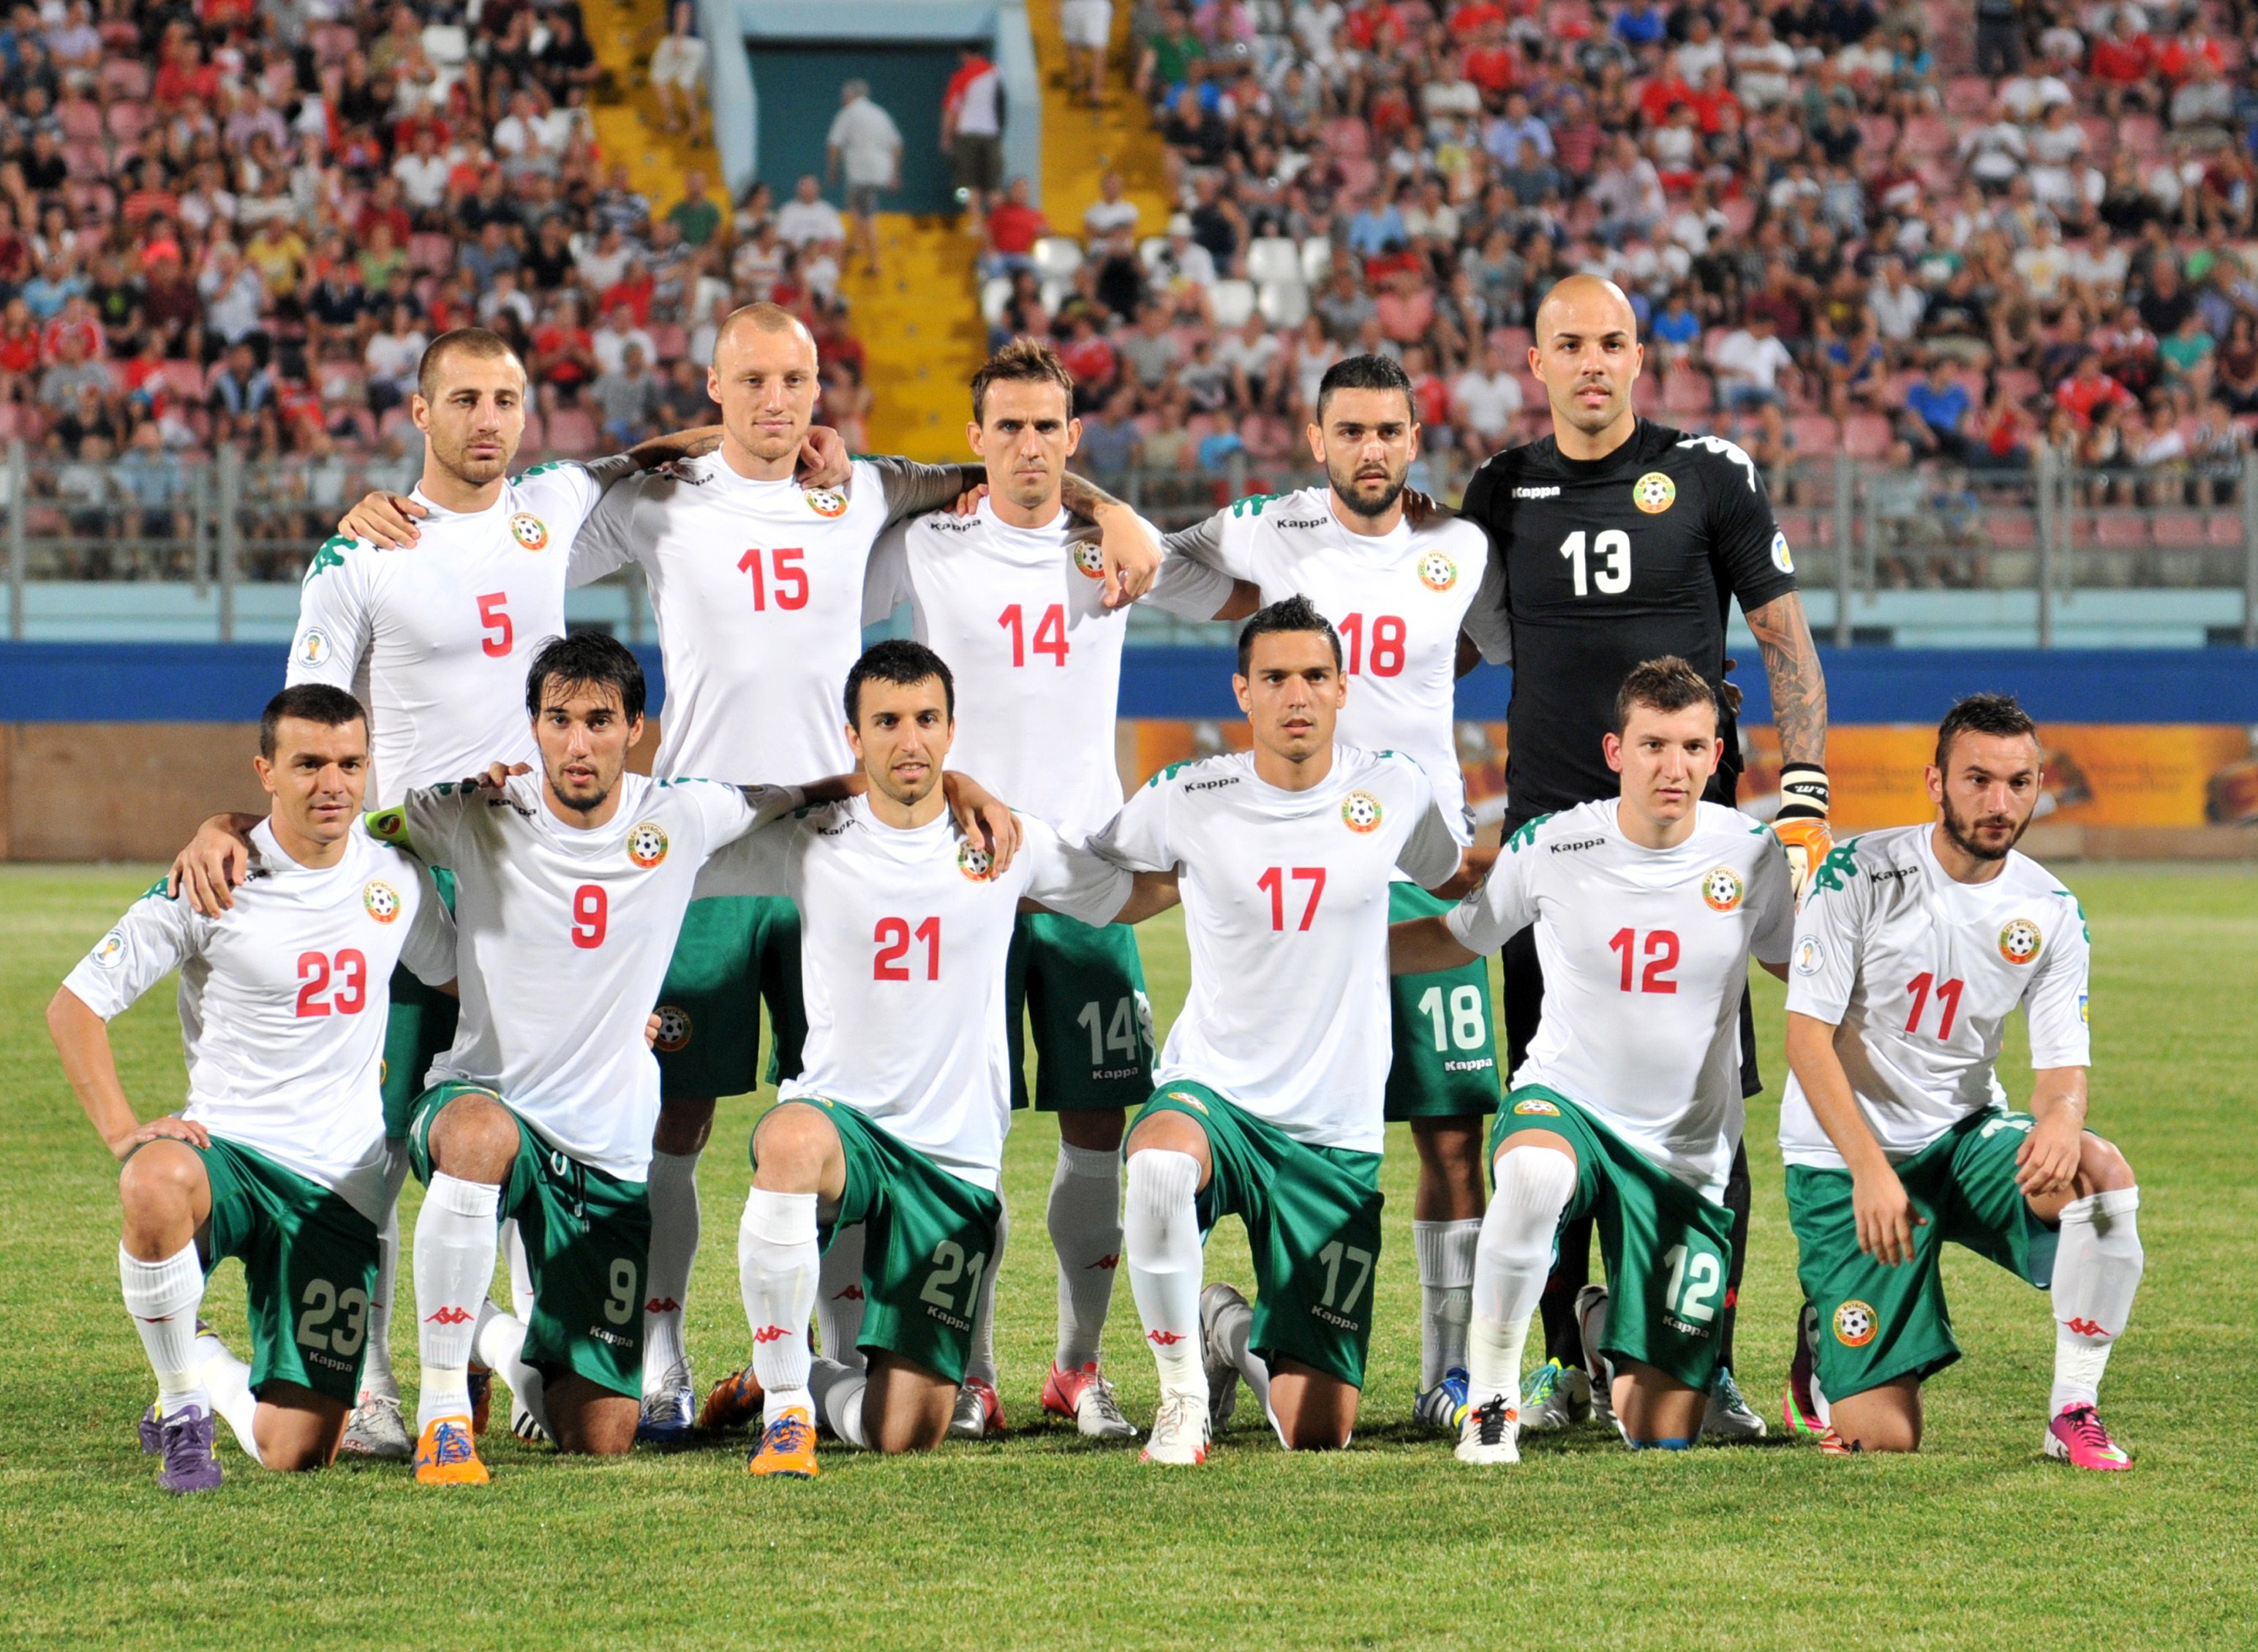 Таблица болгарии по футболу на сегодня